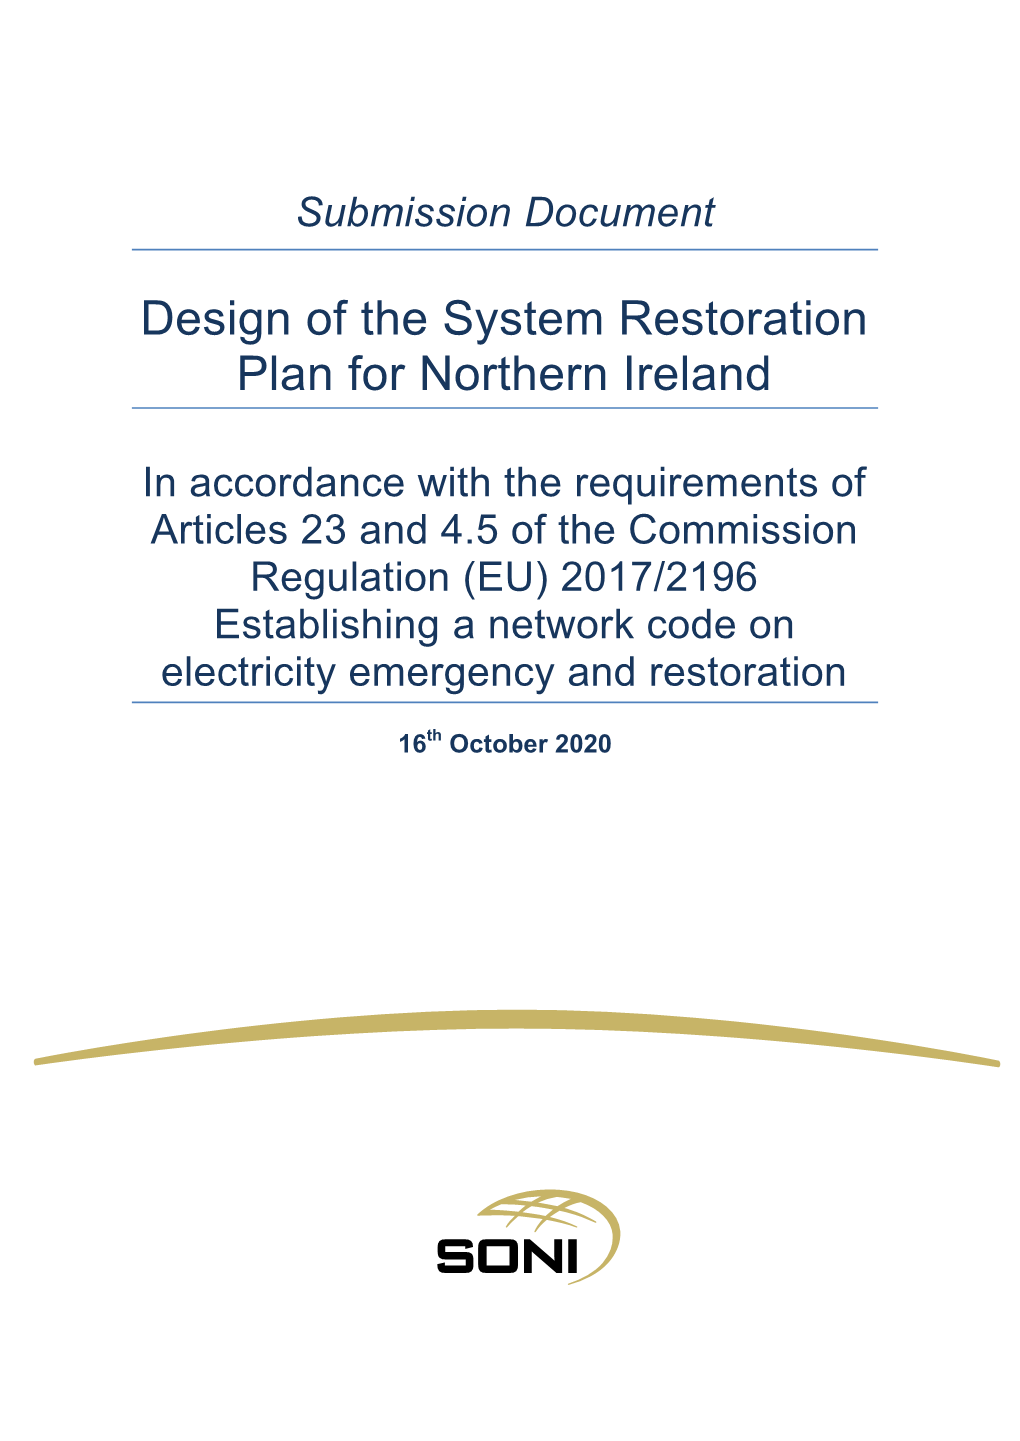 Design of the System Restoration Plan for Northern Ireland